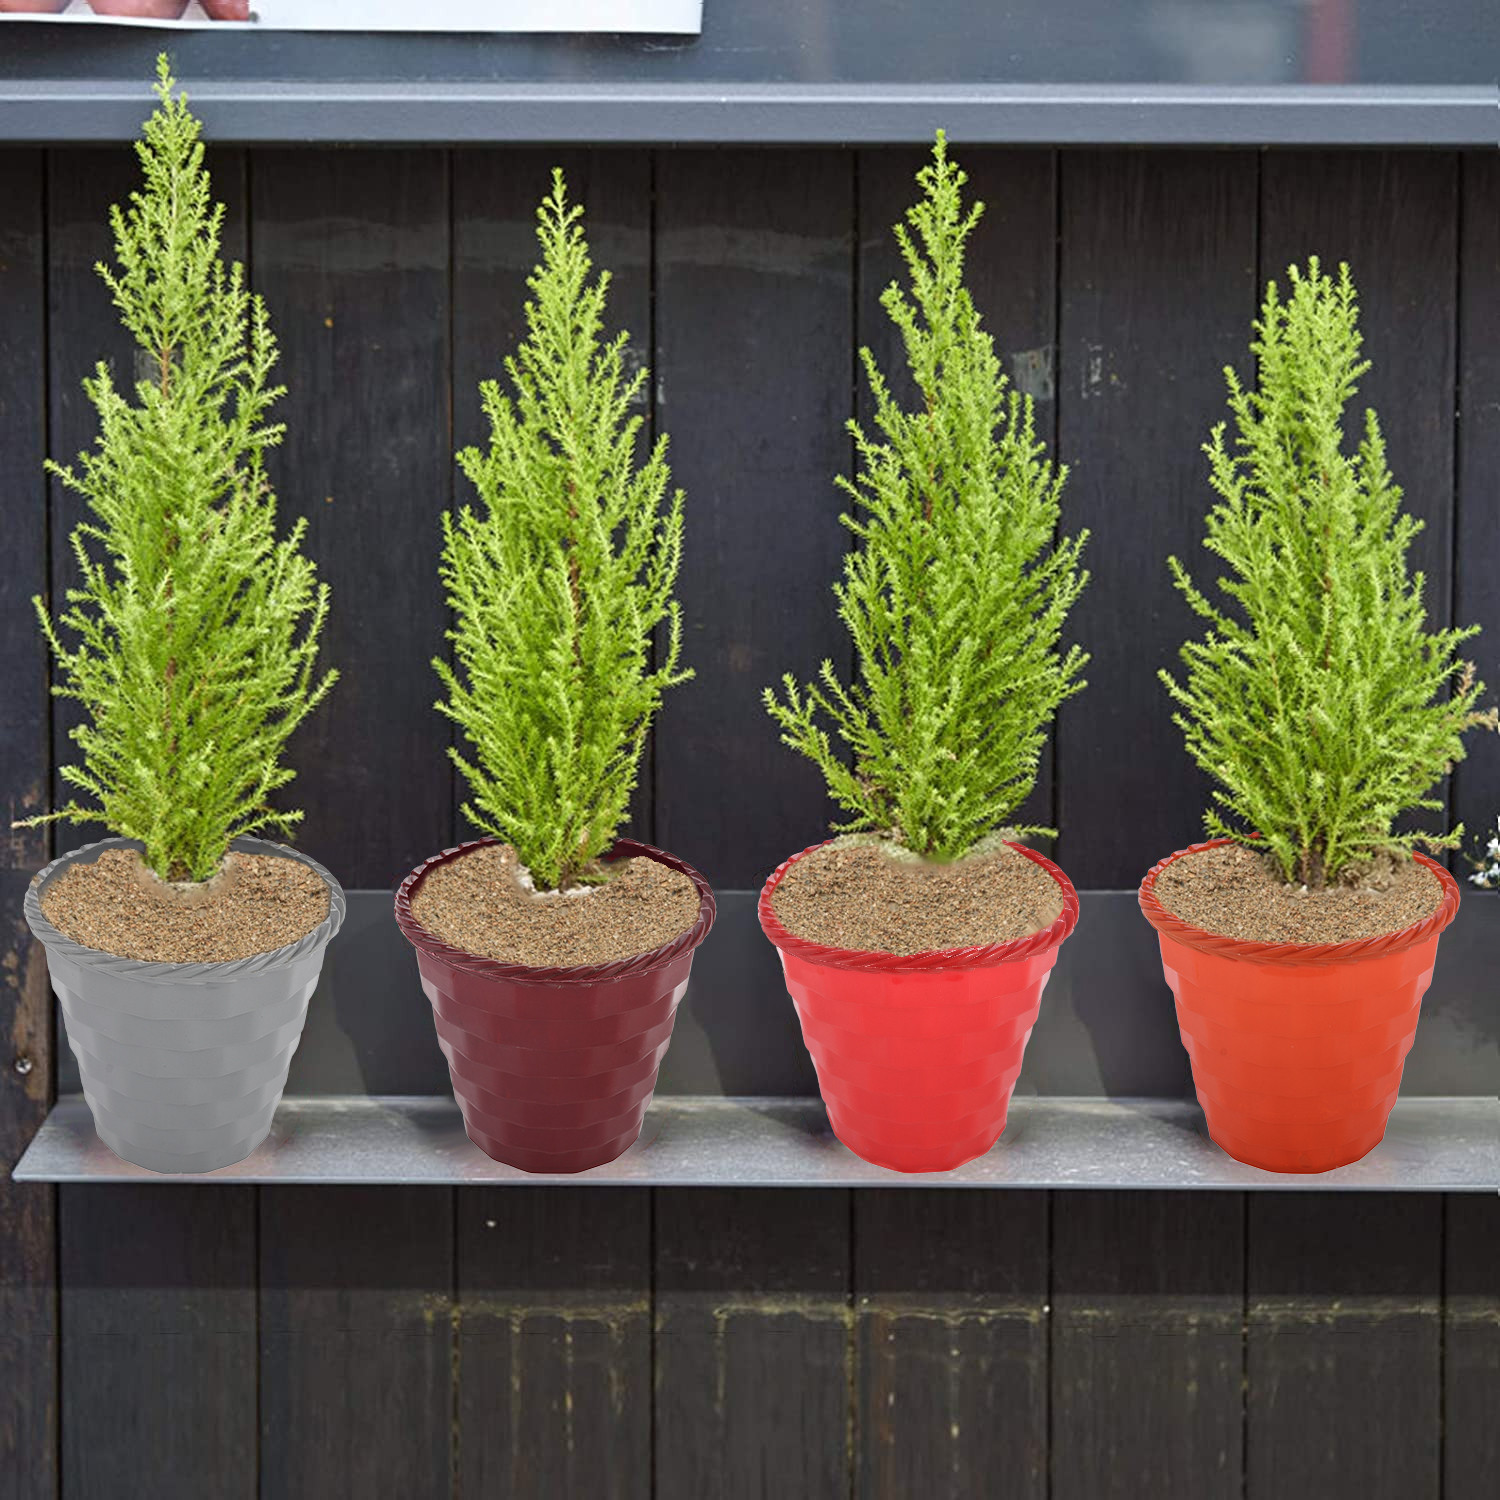 Kuber Industries Brick Flower Pot|Durable Plastic Flower Pots|Planters for Home Décor|Garden|Living Room|Balcony|8 Inch|Pack of 2 (Red & Golden)